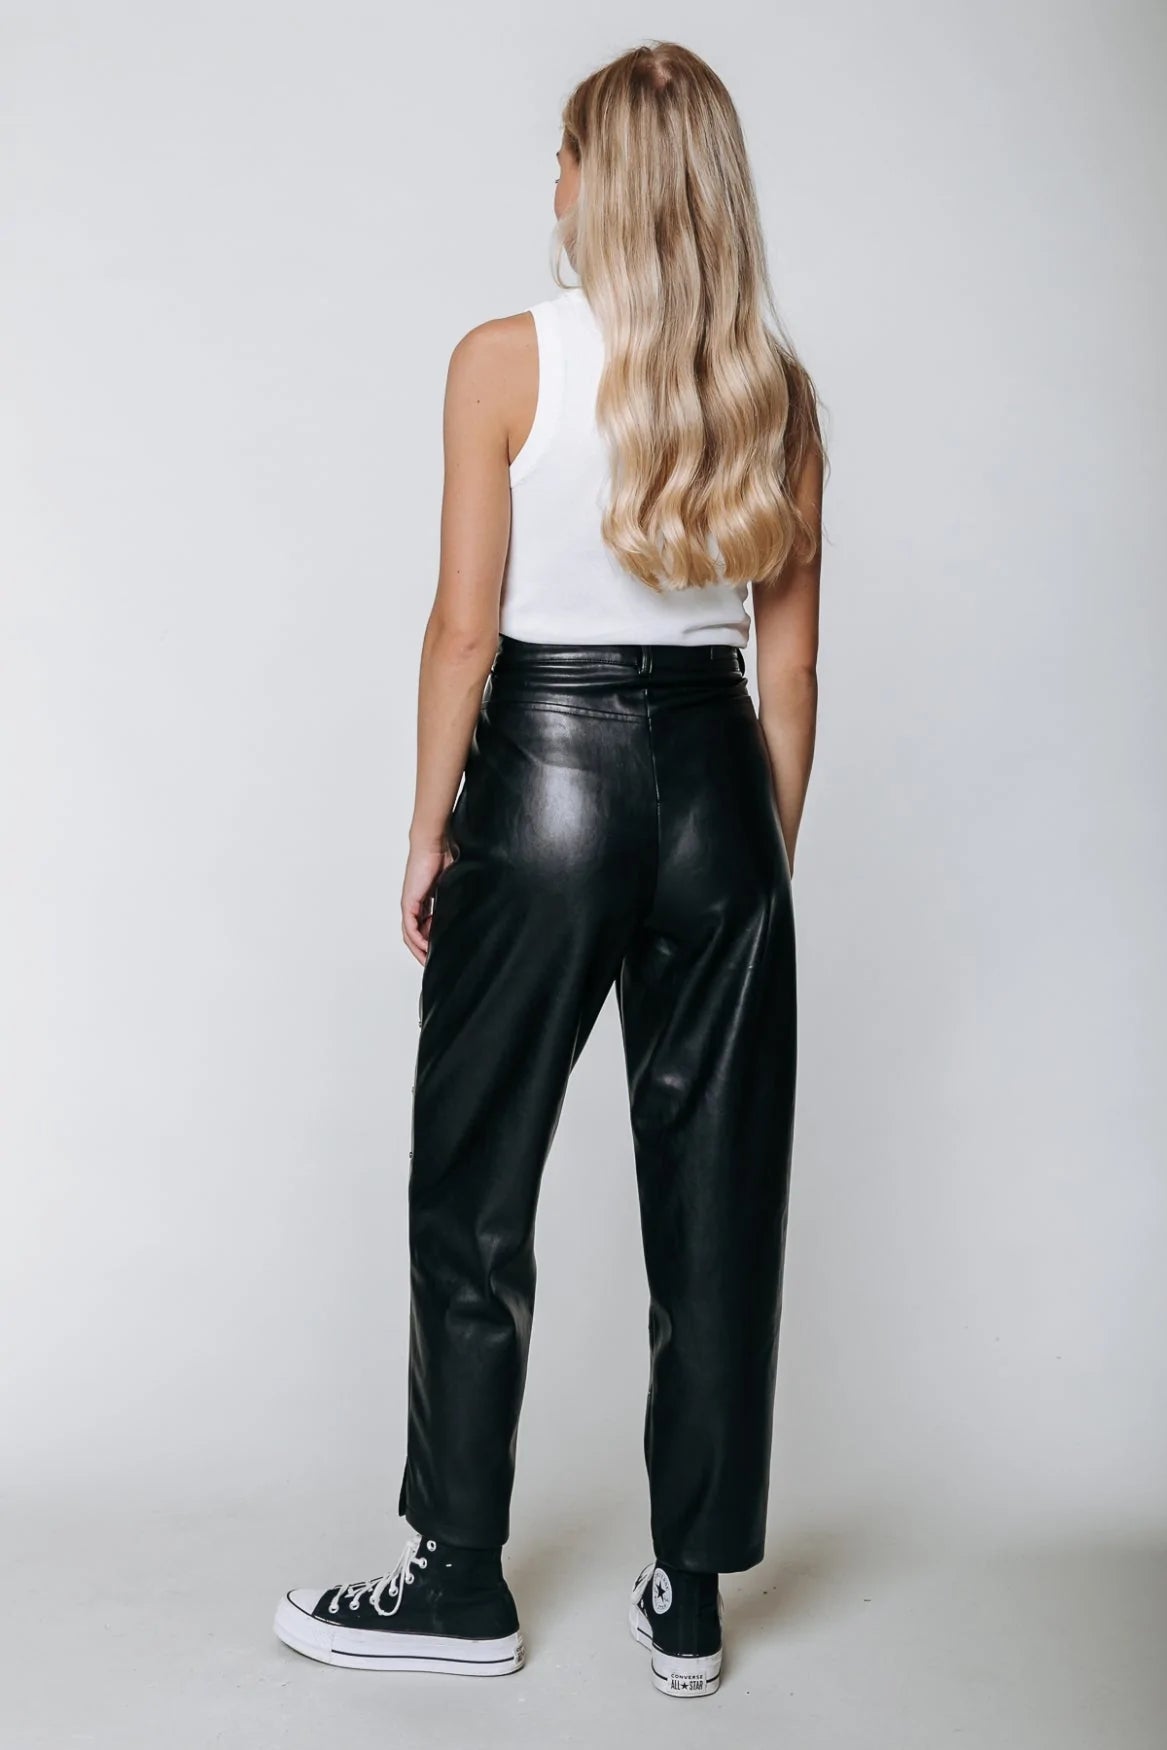 CR Kristel Studs Vegan Leather High Waist pants